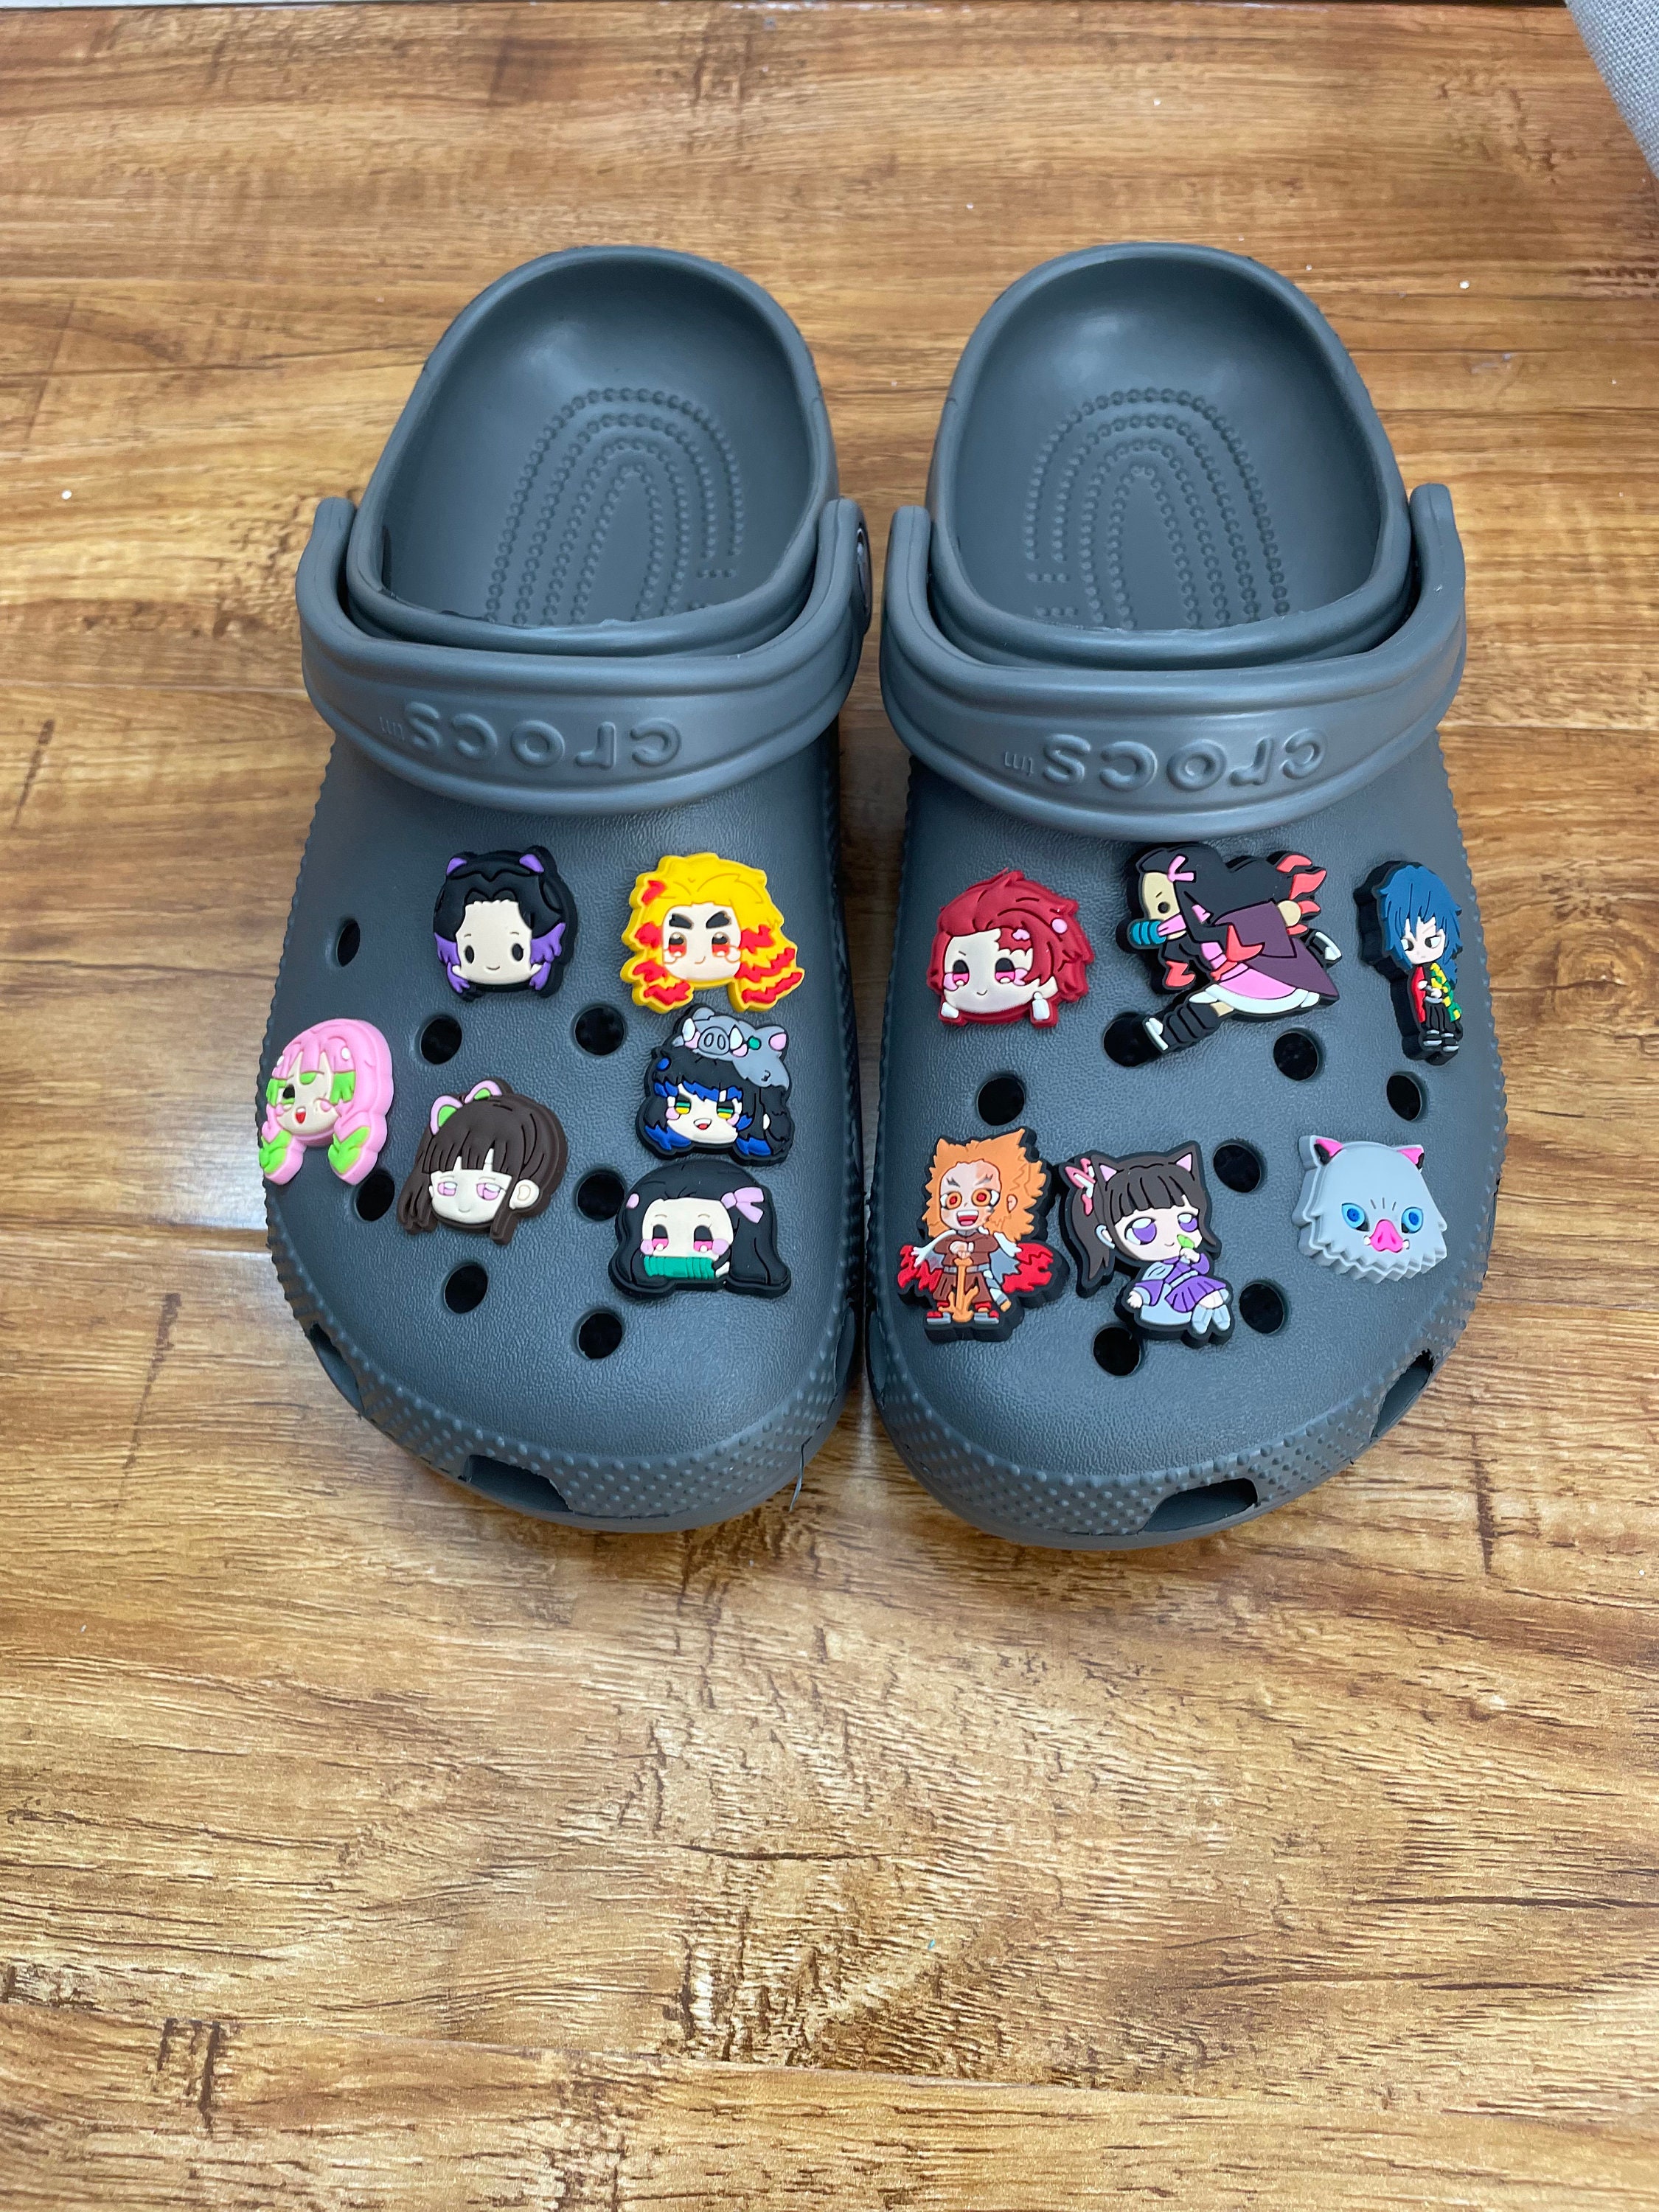 One Piece Anime Characters Crocs Shoe Charms-Anime Shoe Charms-Anime Crocs Shoe Charms-Cute Crocs Shoe Charms